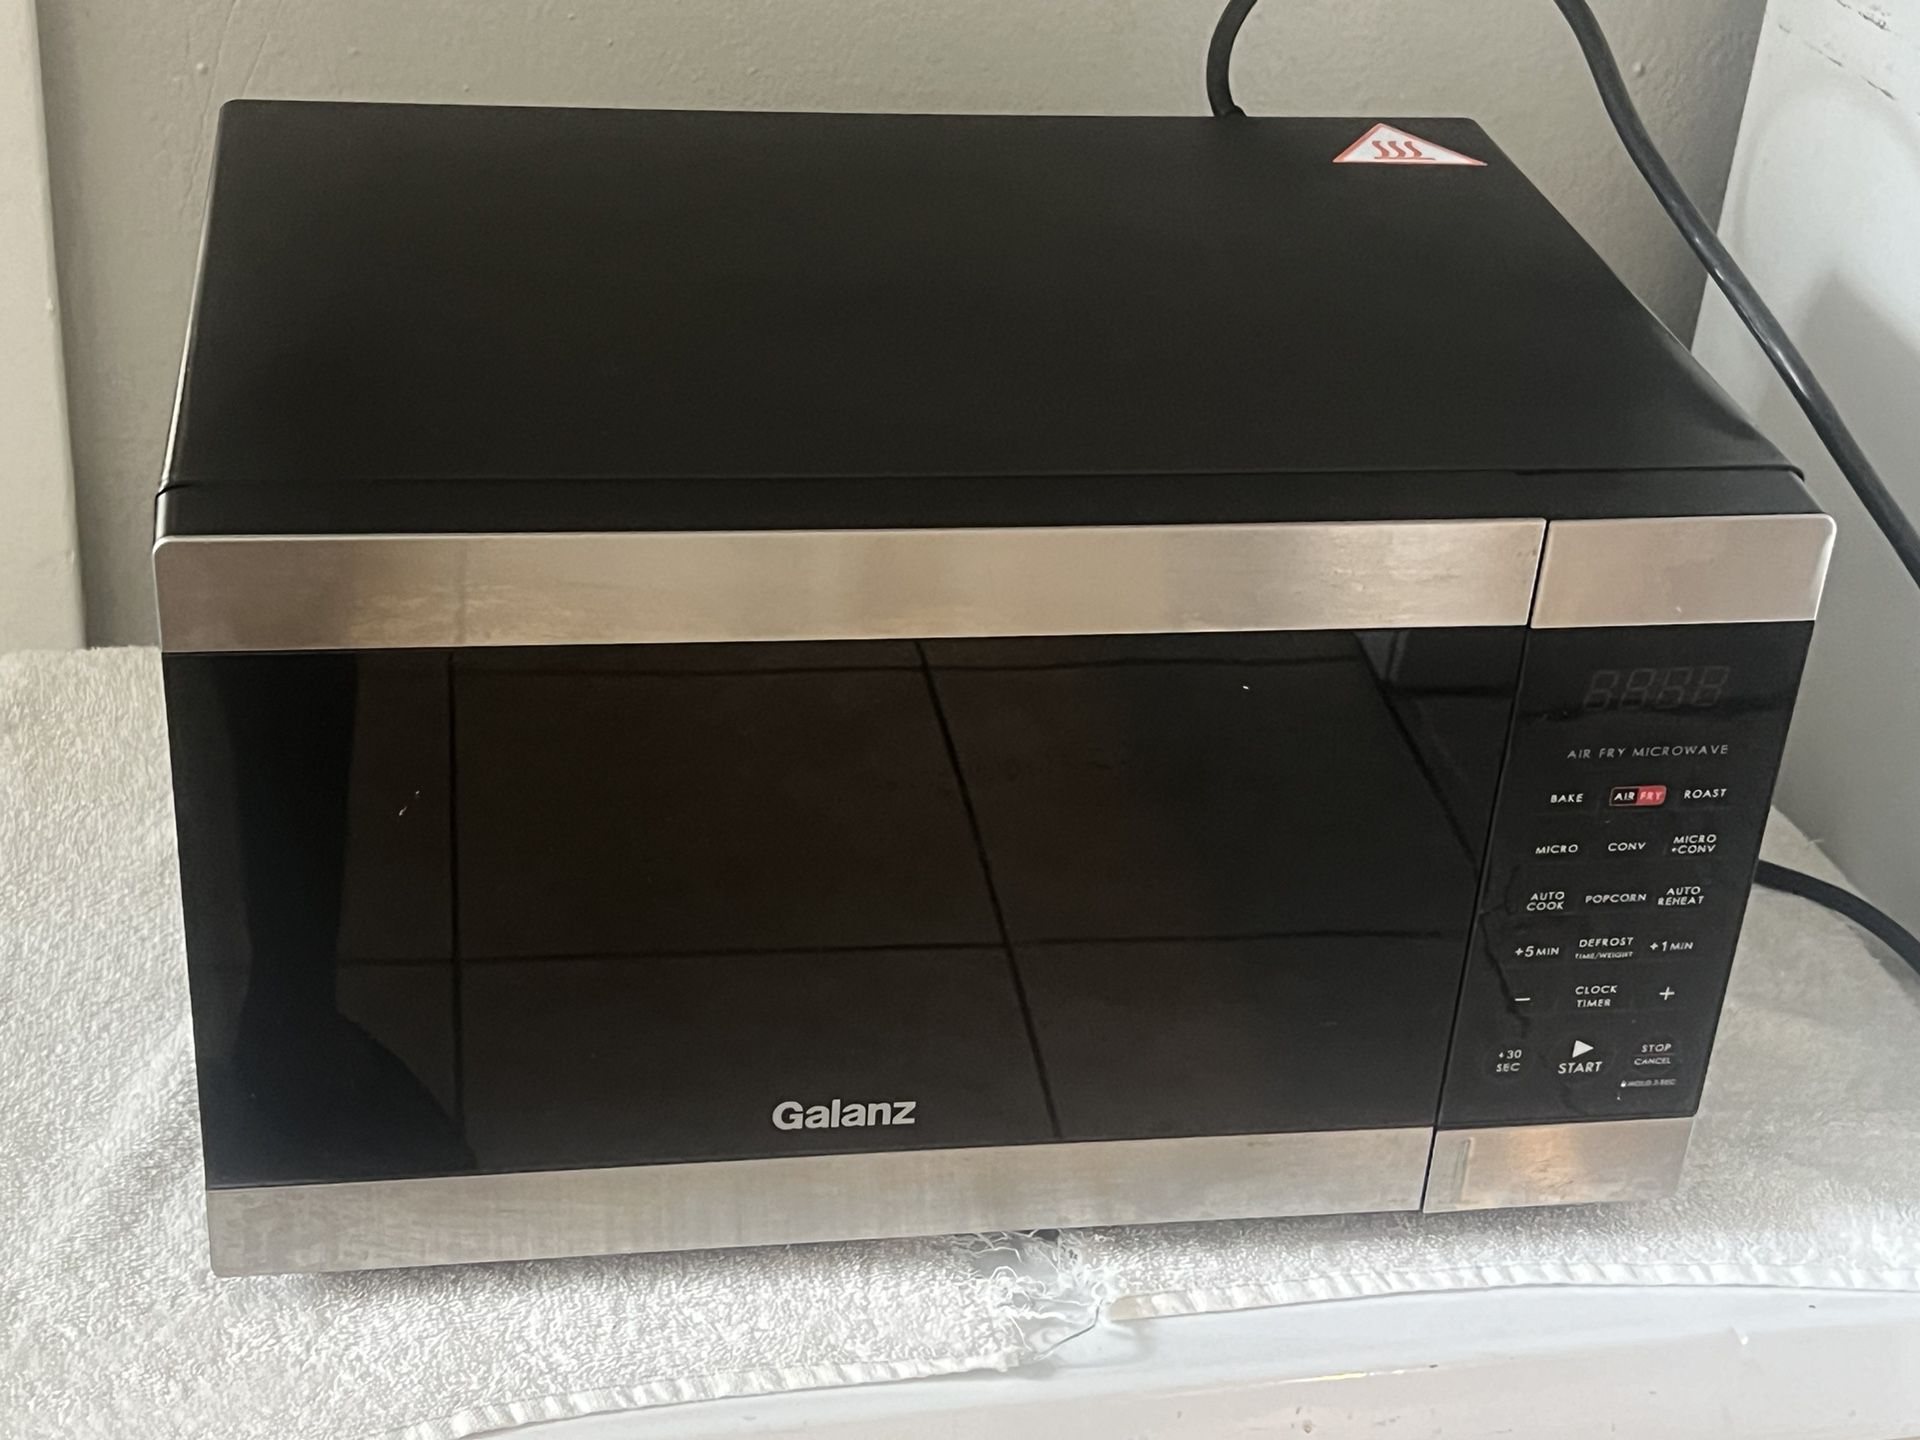 Galanz Microwave/Airfryer